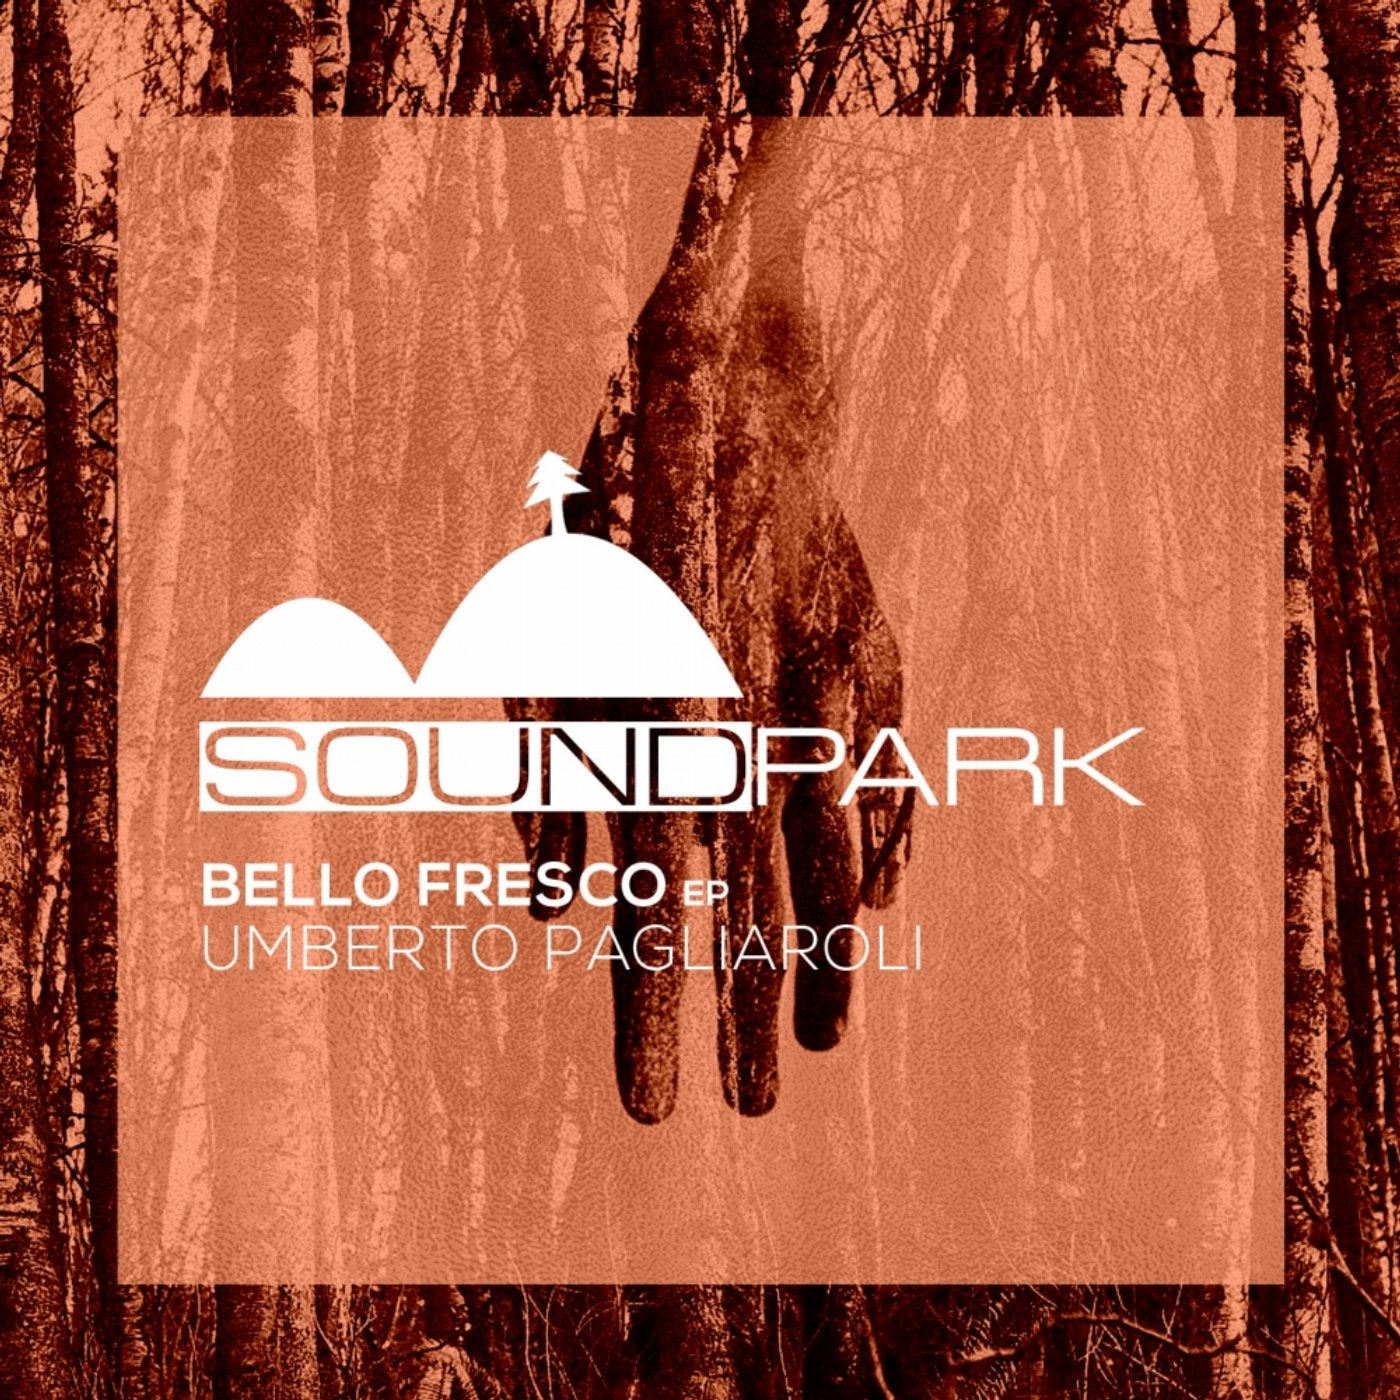 Soundpark artists & music download - Beatport